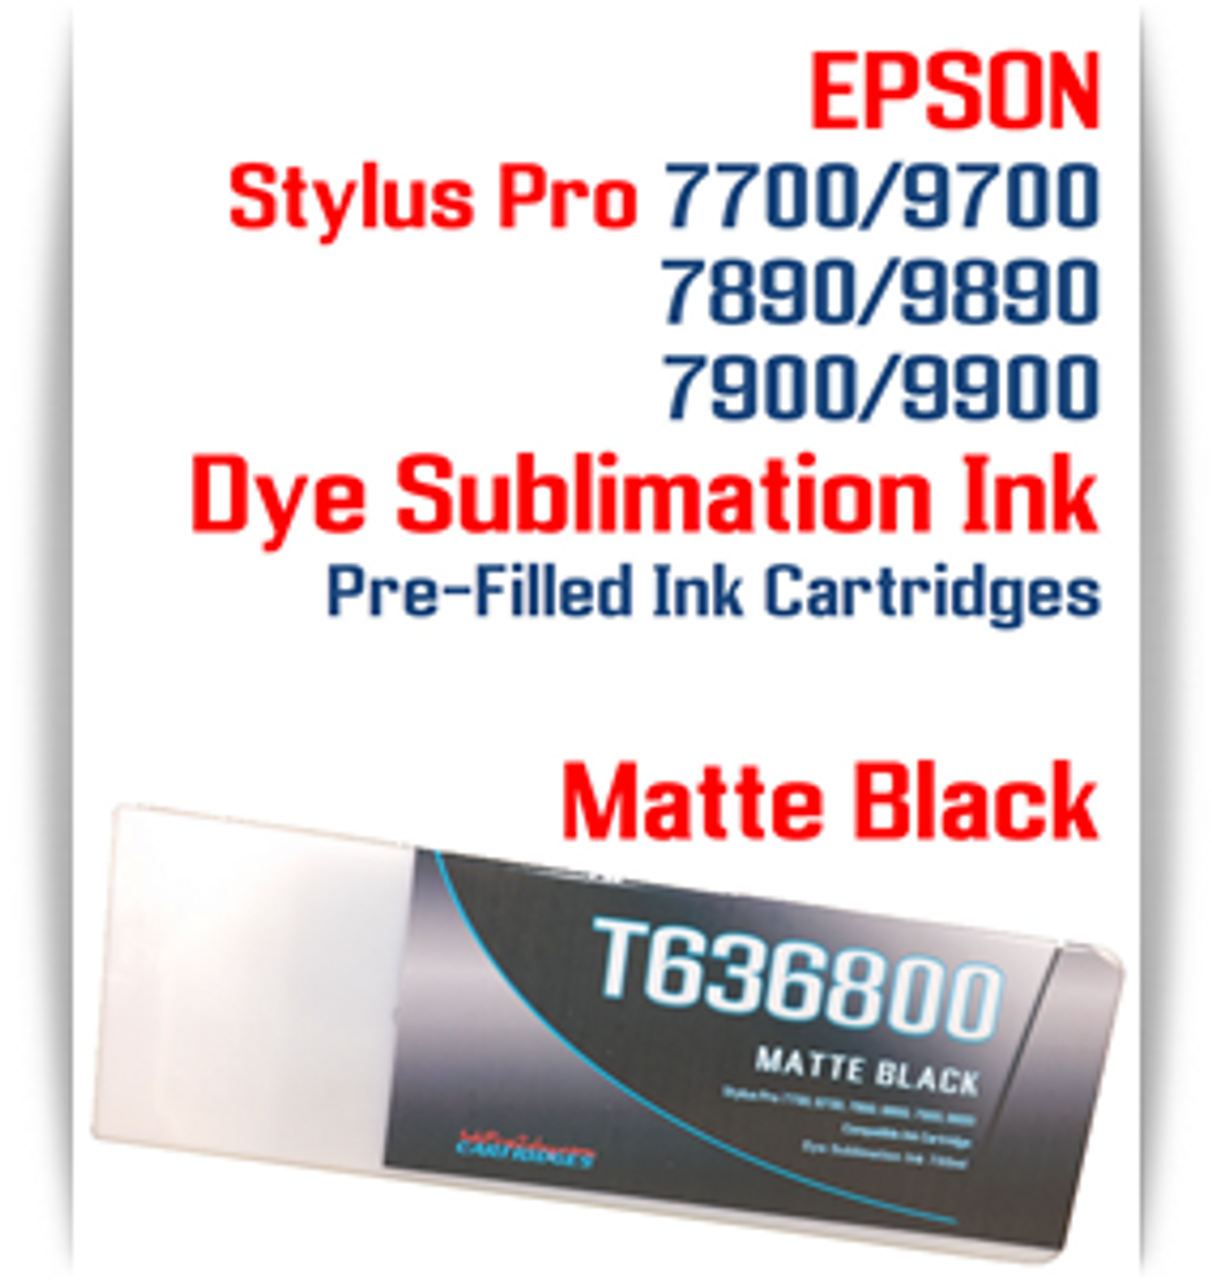 Matte Black Epson Stylus Pro 7890/9890 Pre-Filled Dye Sublimation Ink Cartridge